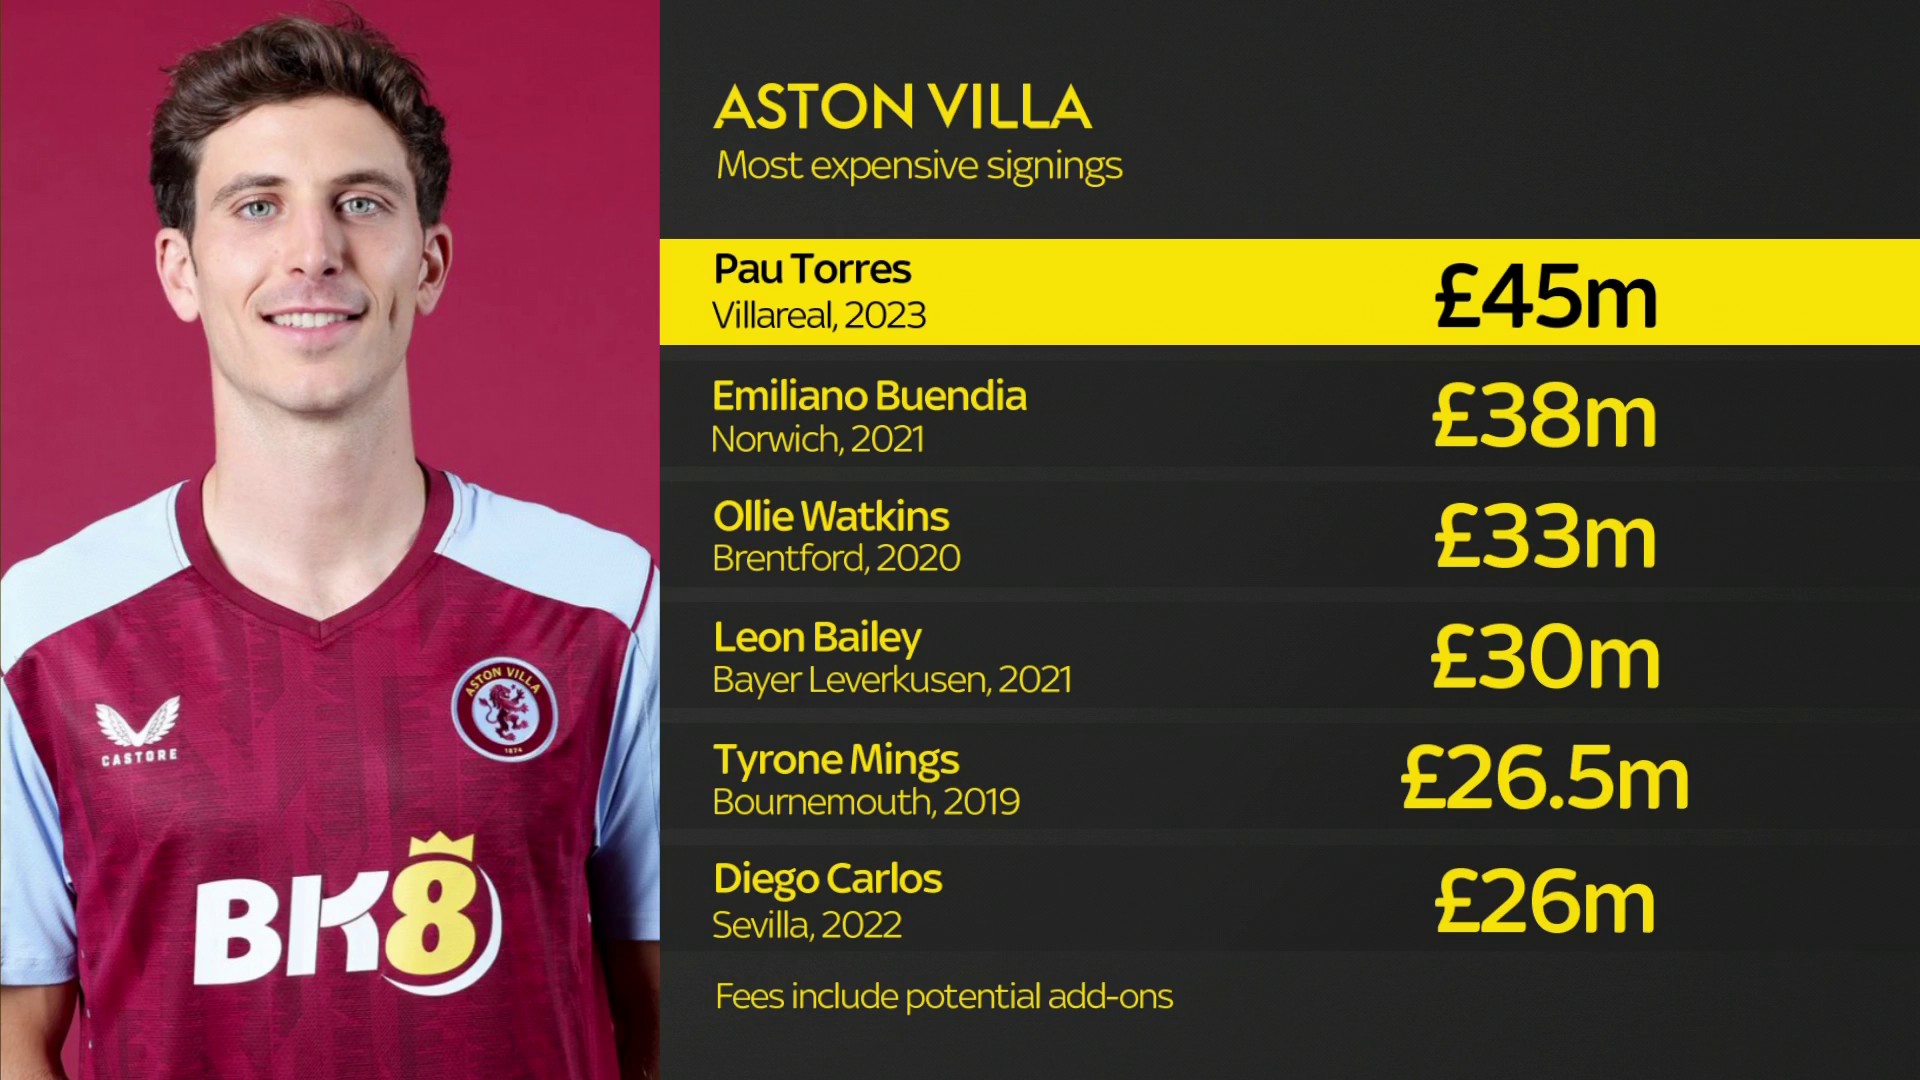 Aston villa signings 2023